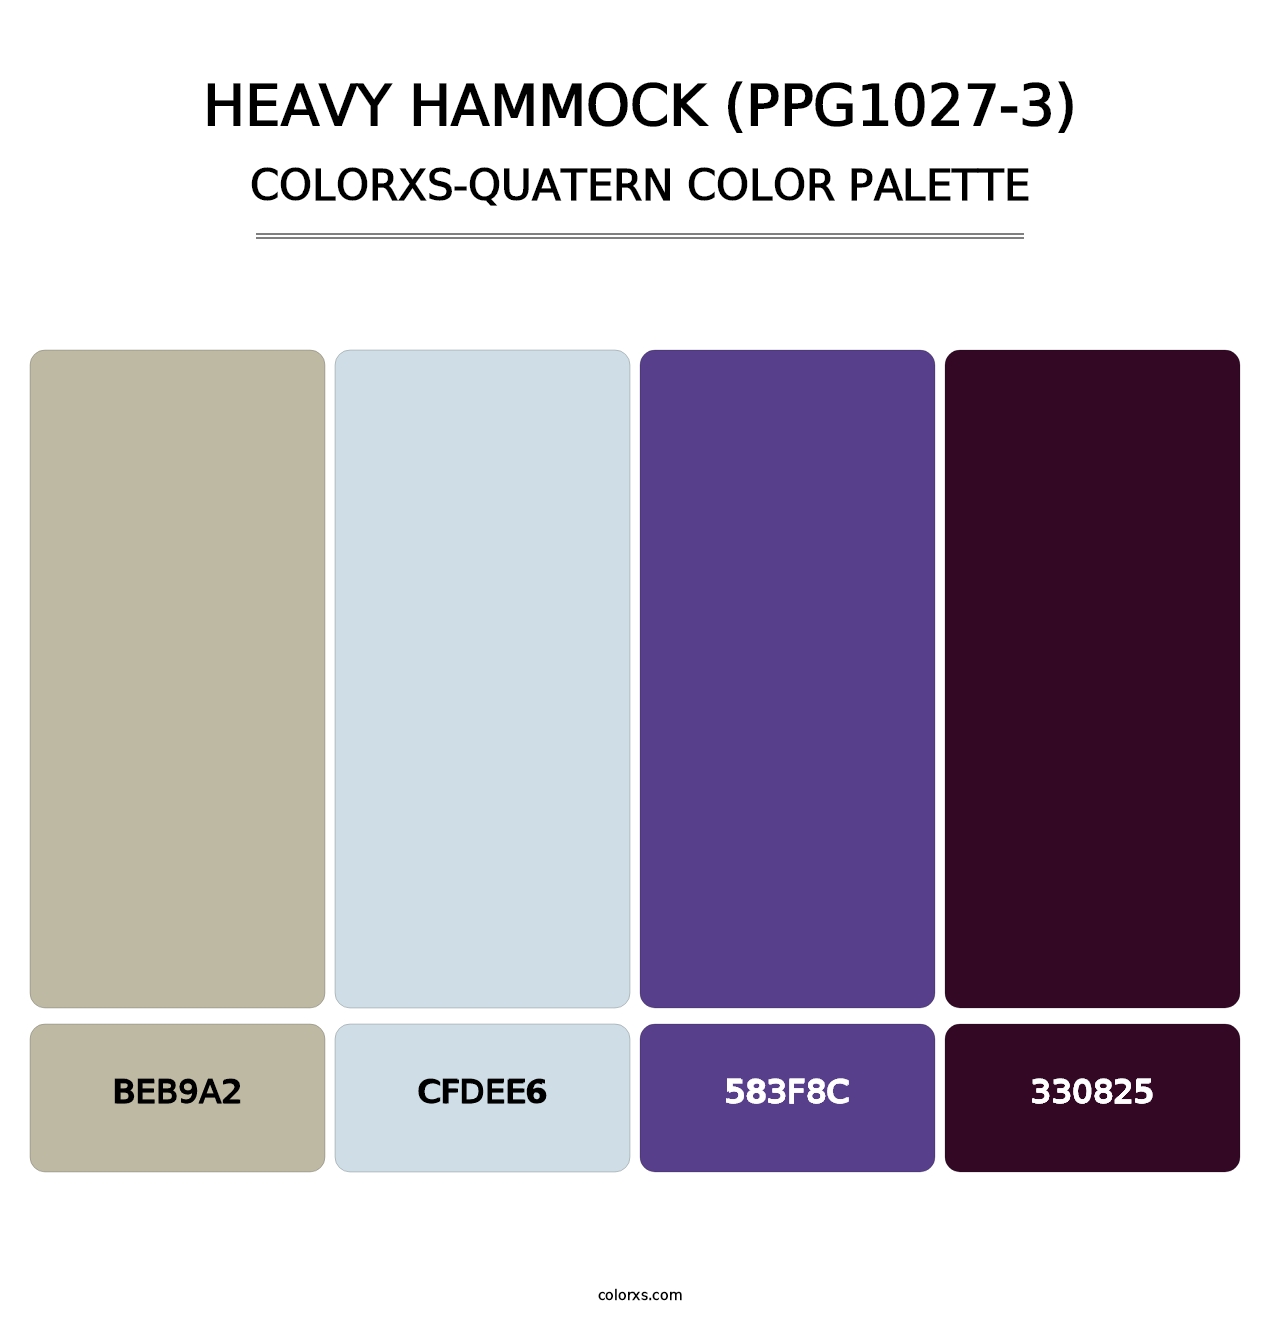 Heavy Hammock (PPG1027-3) - Colorxs Quatern Palette